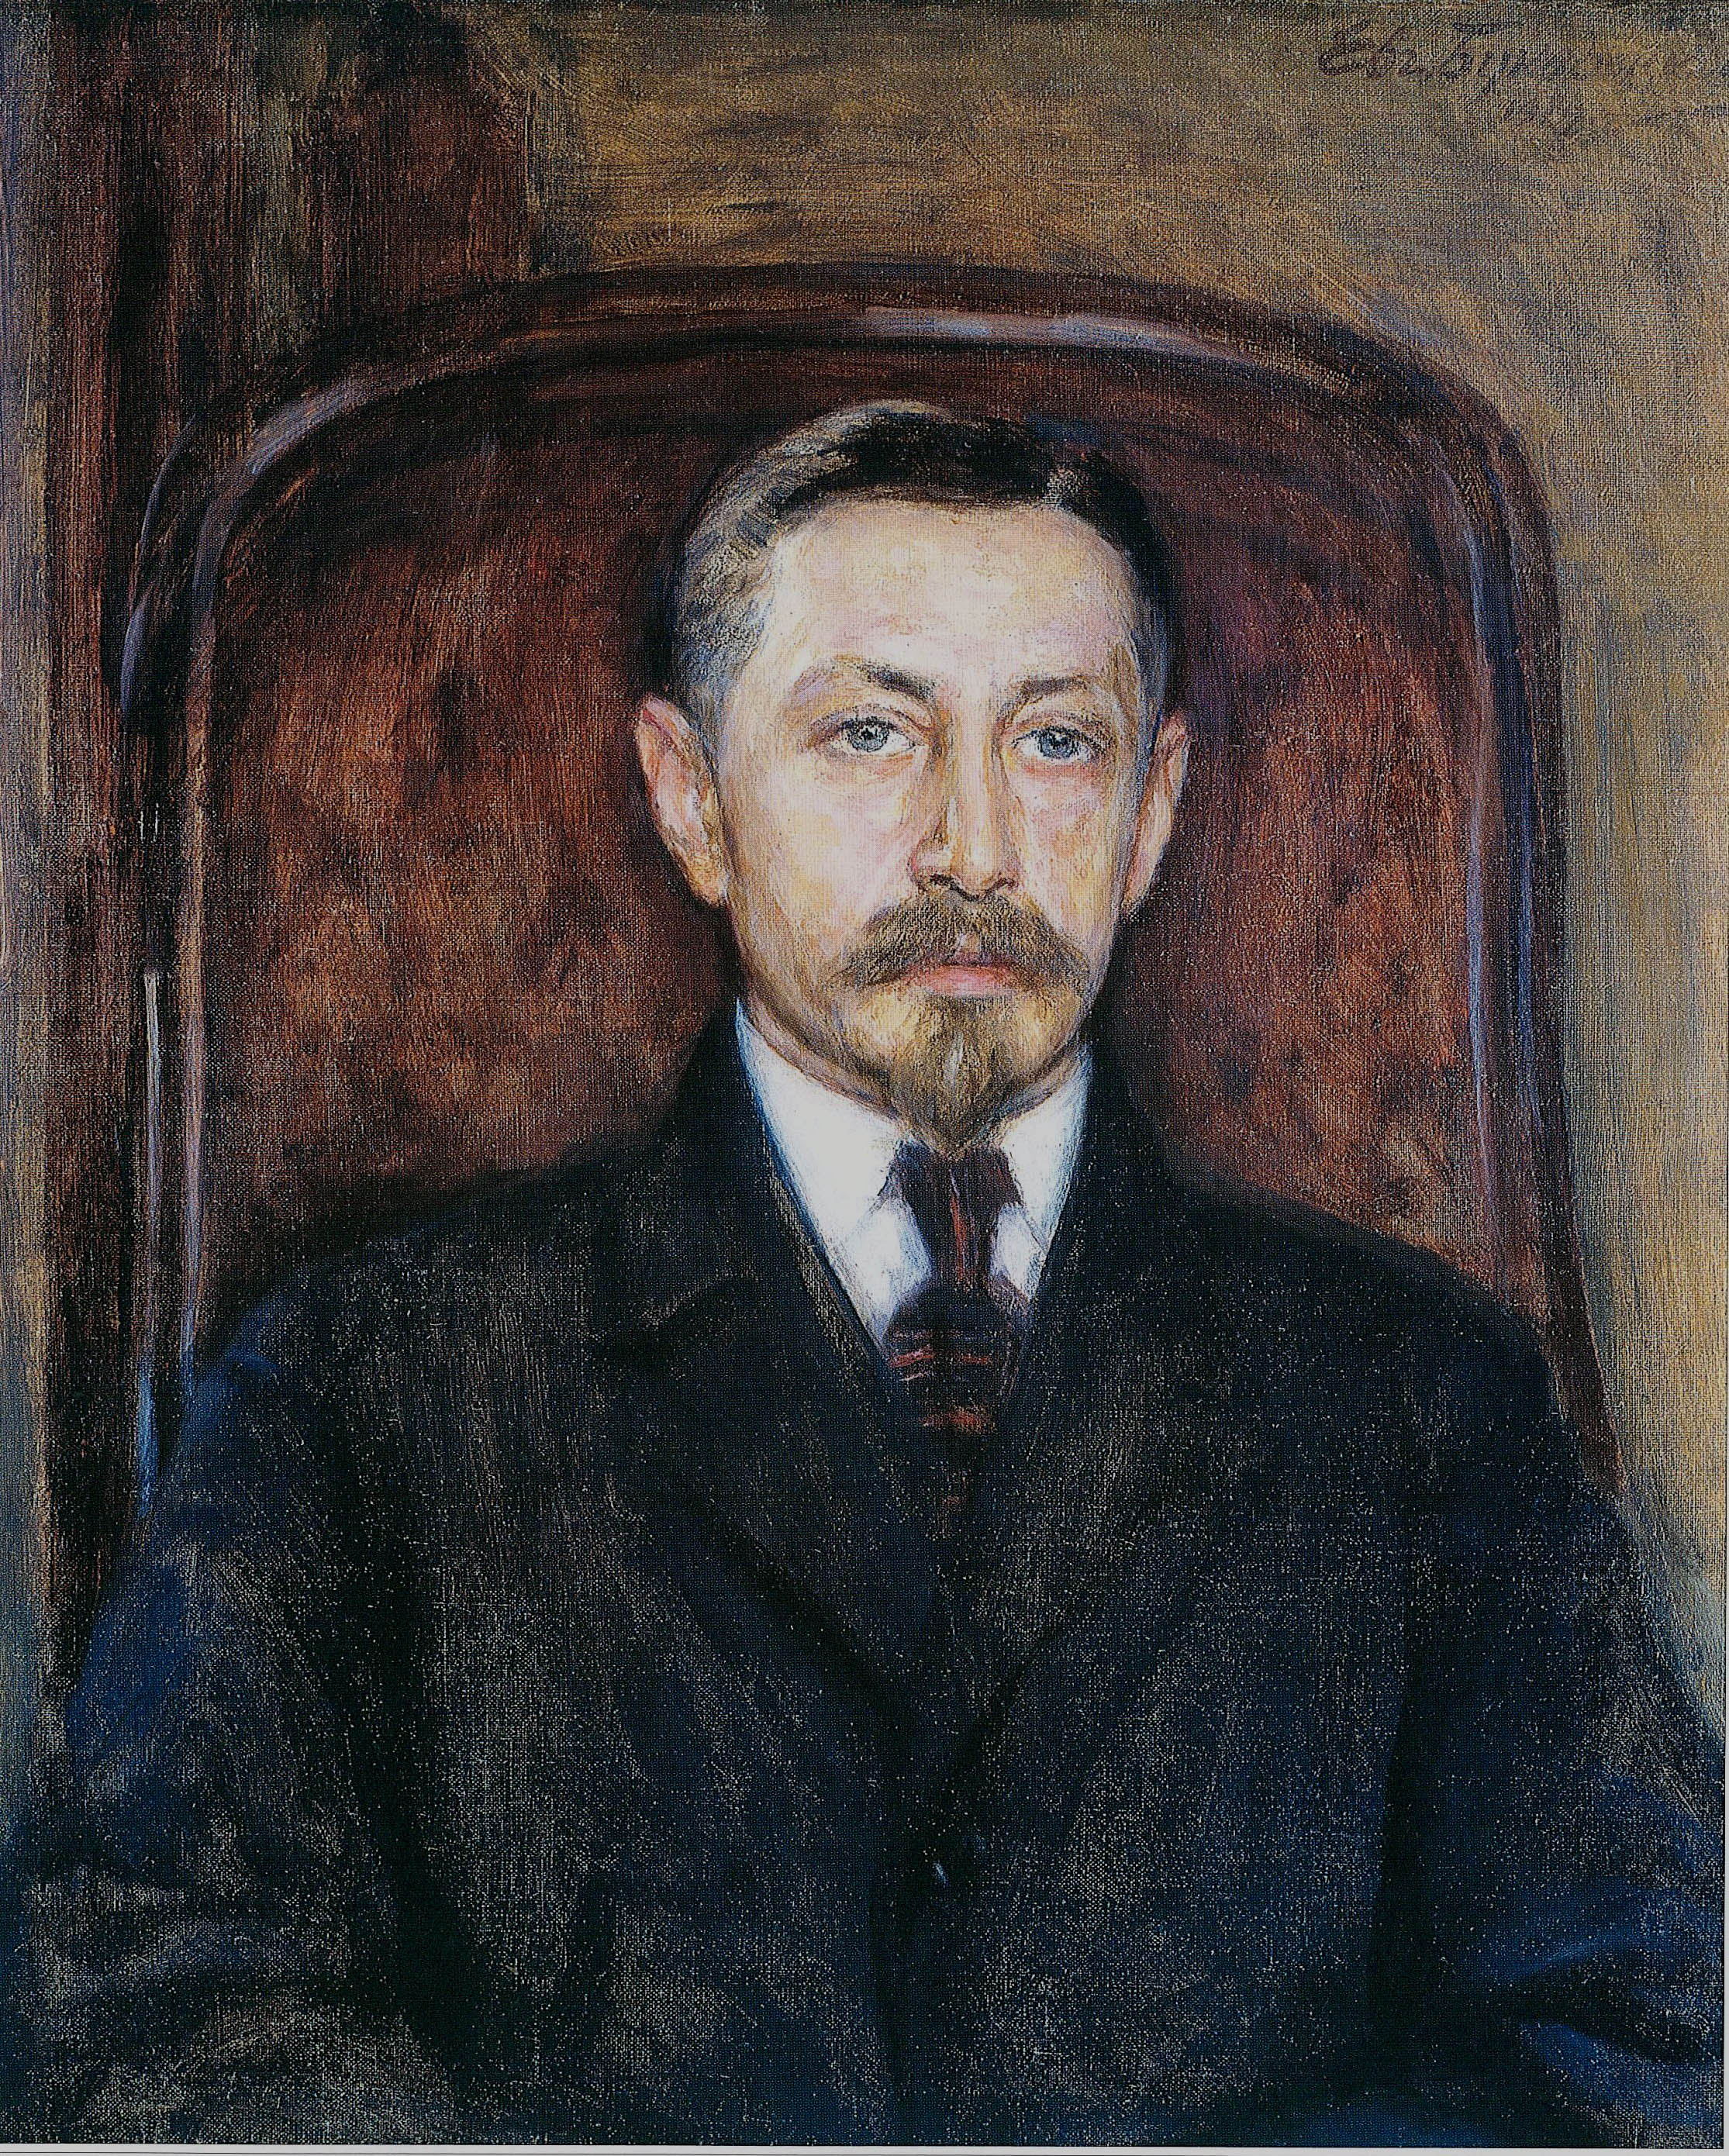 Буковецкий. Портрет Ивана Бунина. 1919